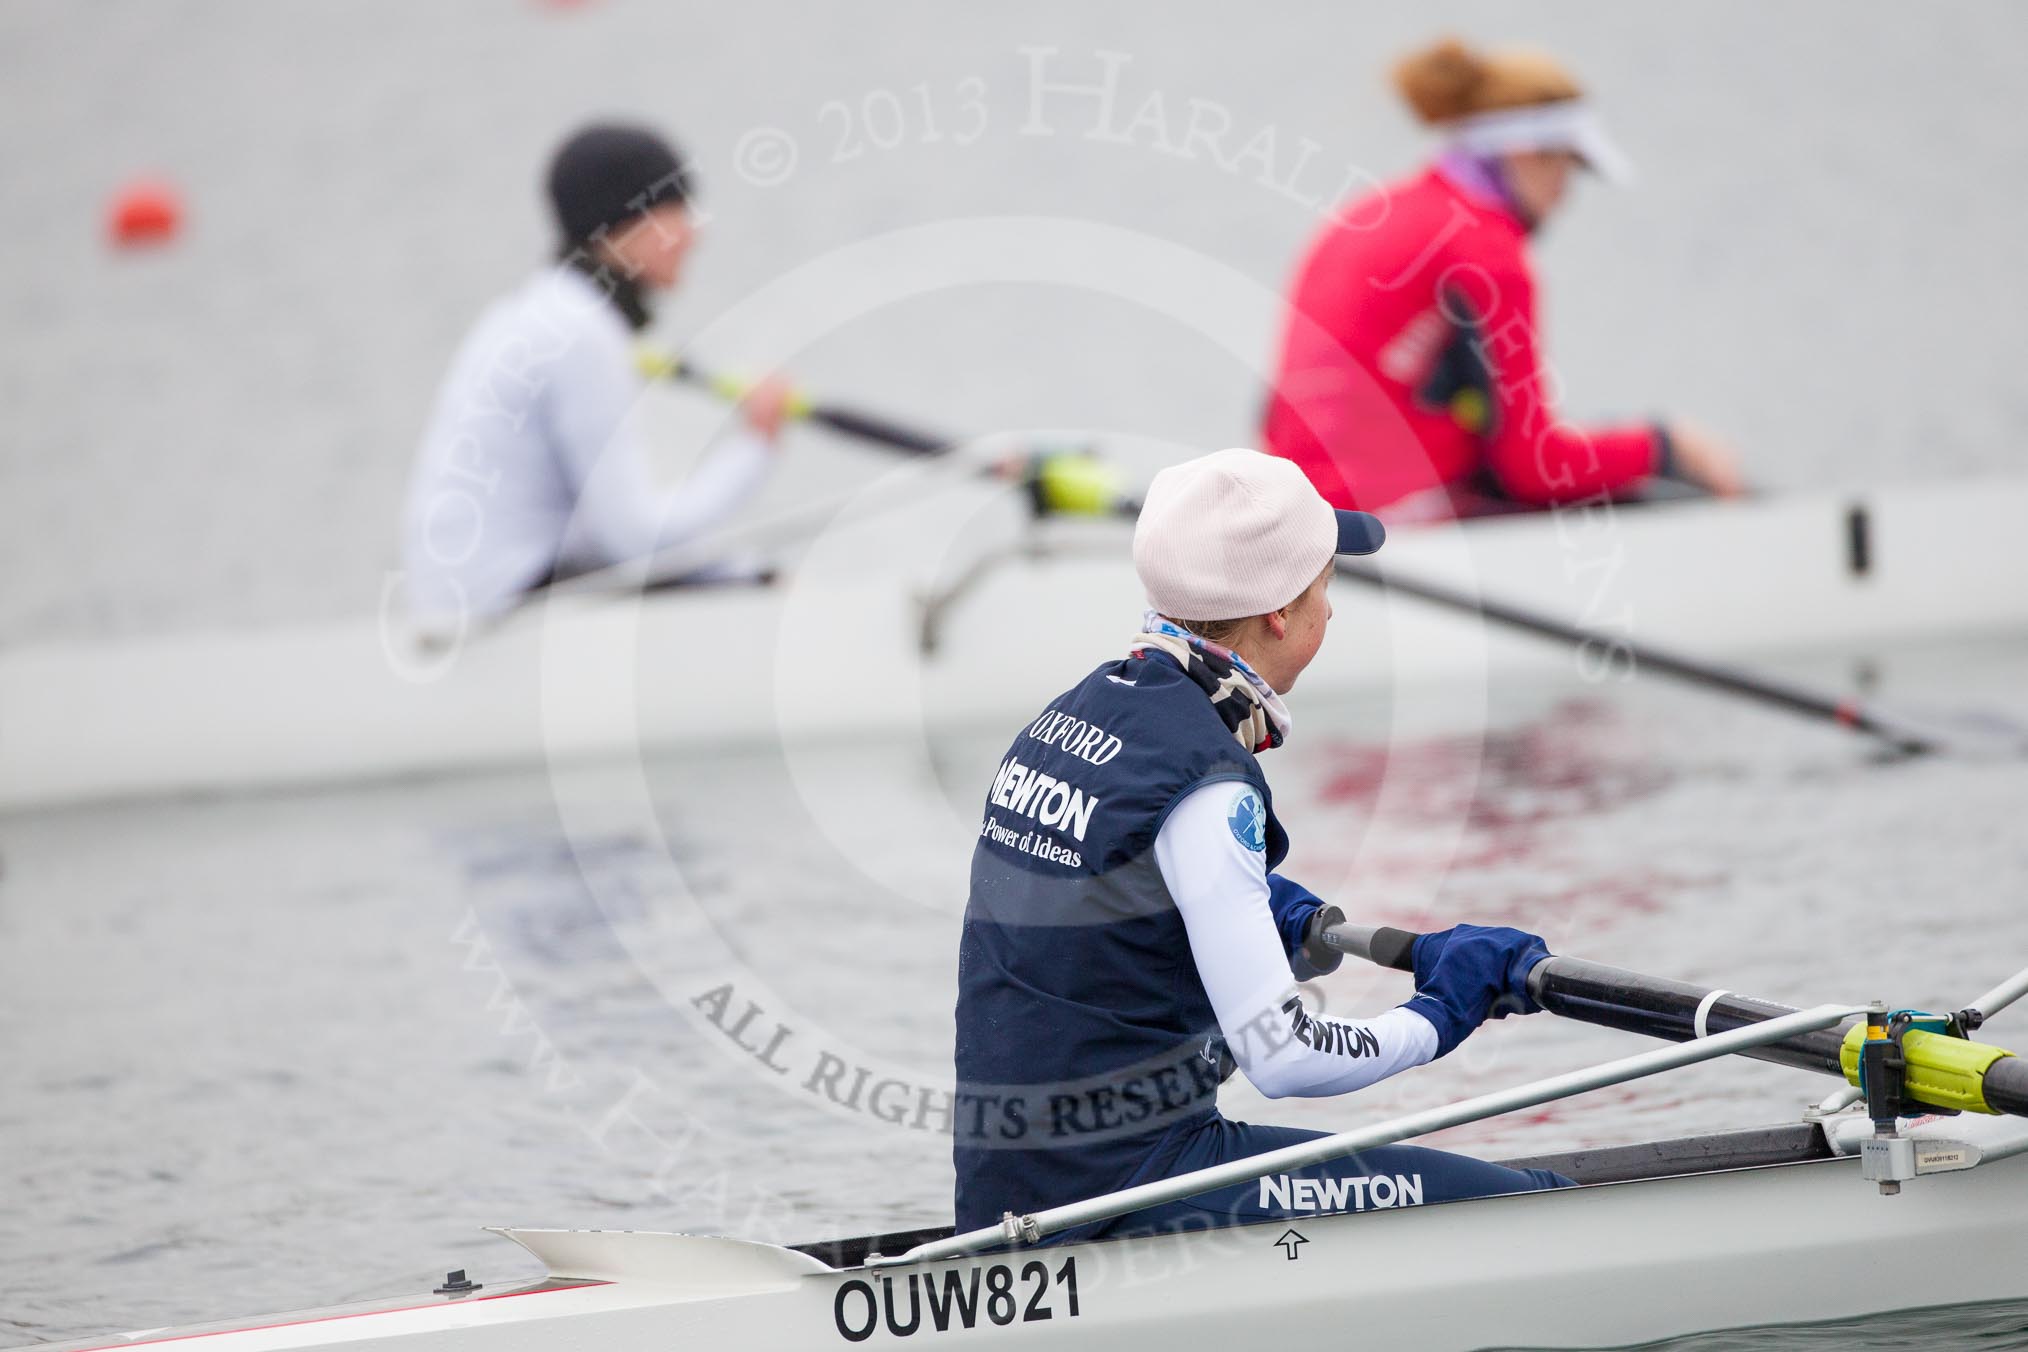 The Boat Race season 2013 - fixture OUWBC vs Molesey BC: OUWBC bow Mariann Novak..
Dorney Lake,
Dorney, Windsor,
Berkshire,
United Kingdom,
on 24 February 2013 at 12:02, image #97